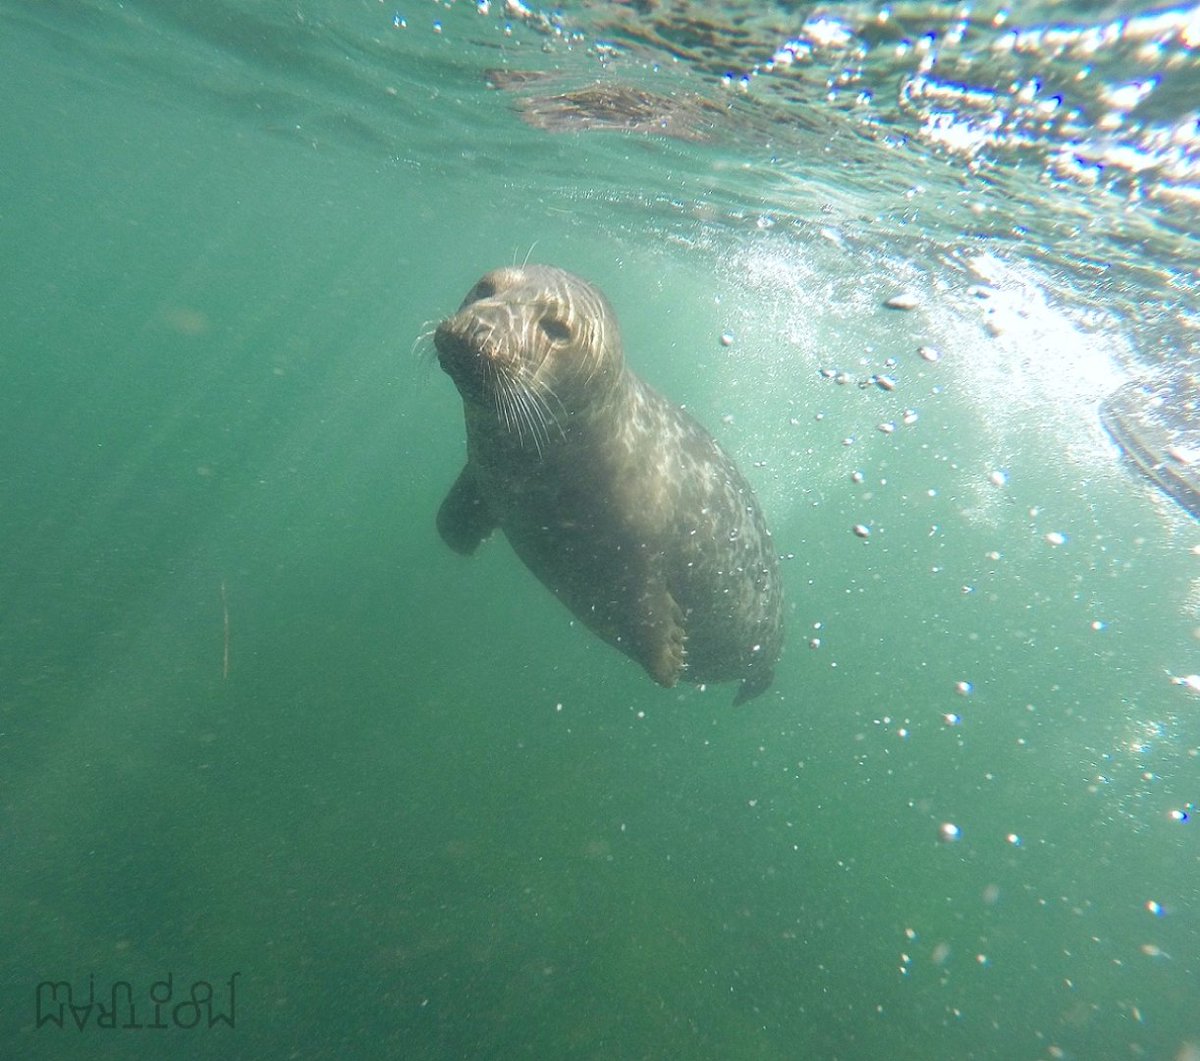 Here comes weekend!

#SanDiego #SoCalX #natureislit #goprohero #underwaterphoto